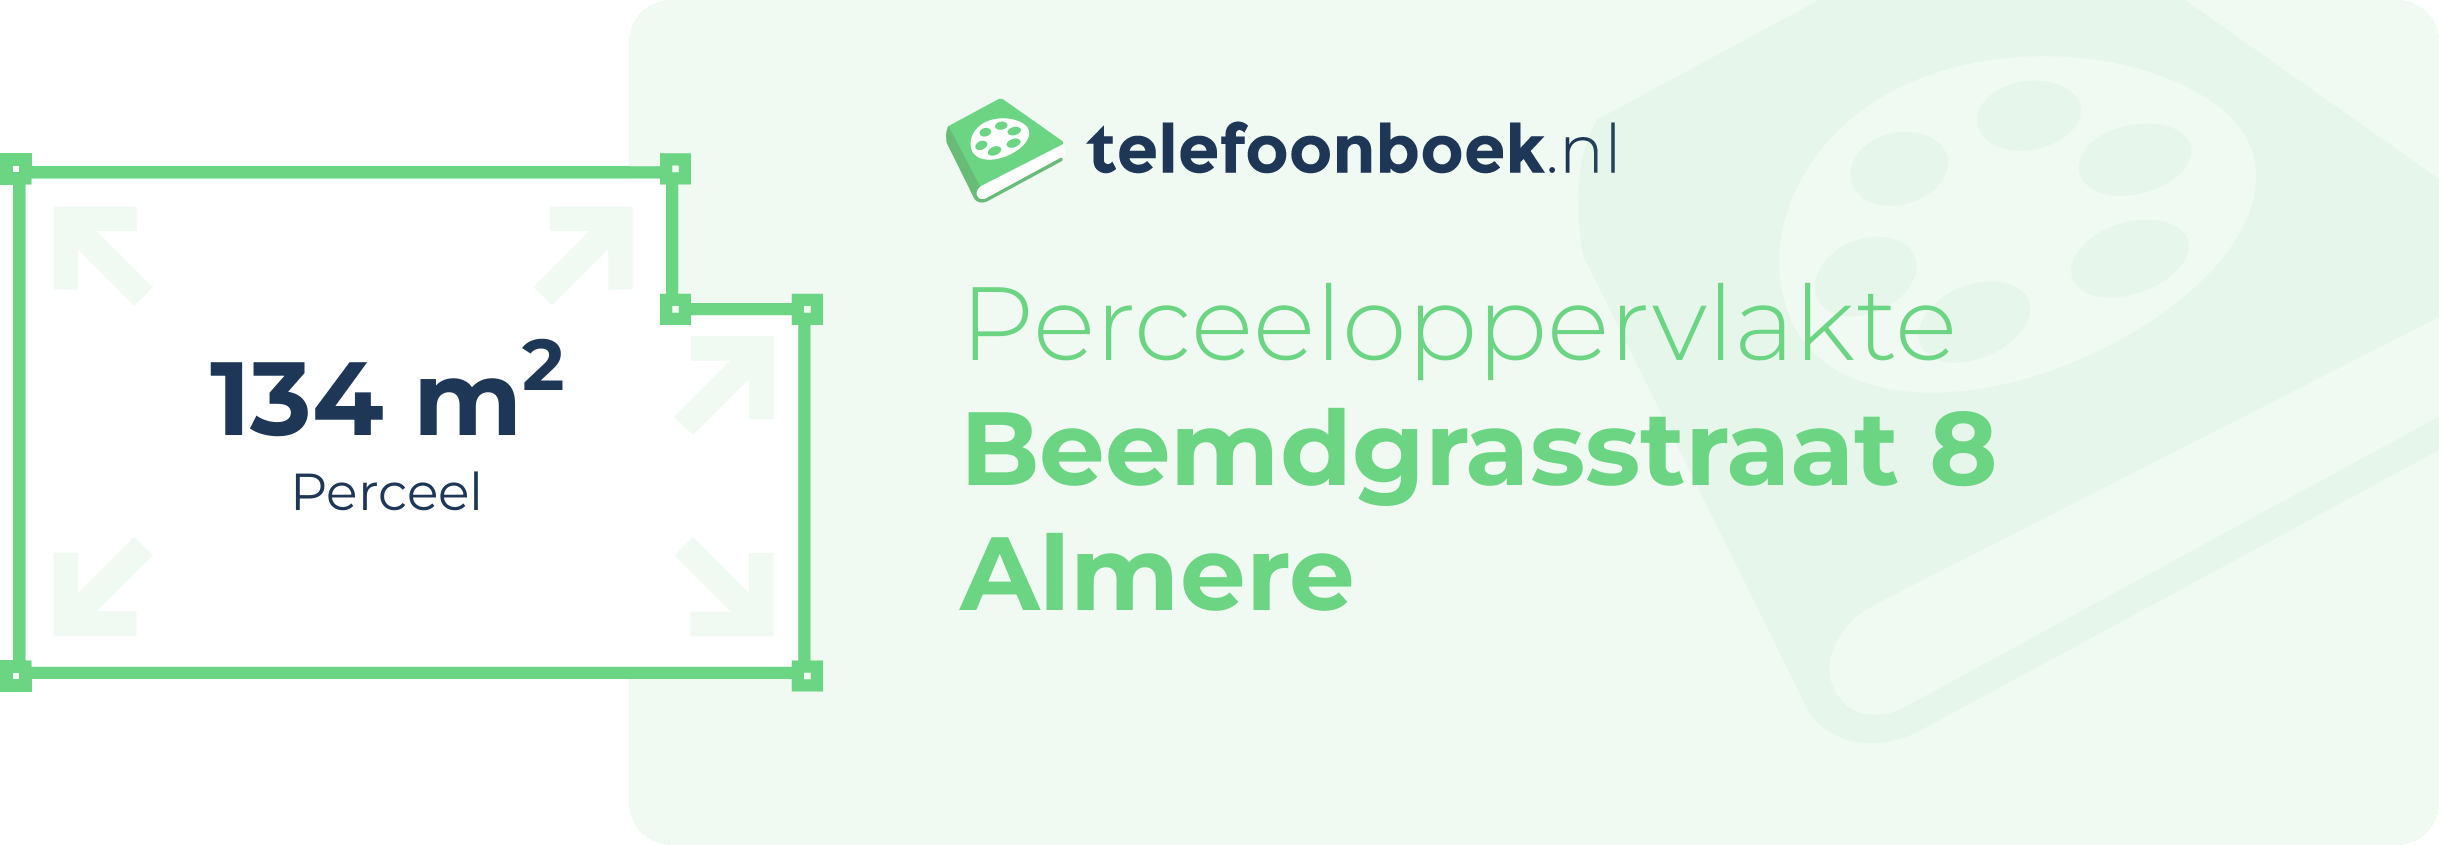 Perceeloppervlakte Beemdgrasstraat 8 Almere